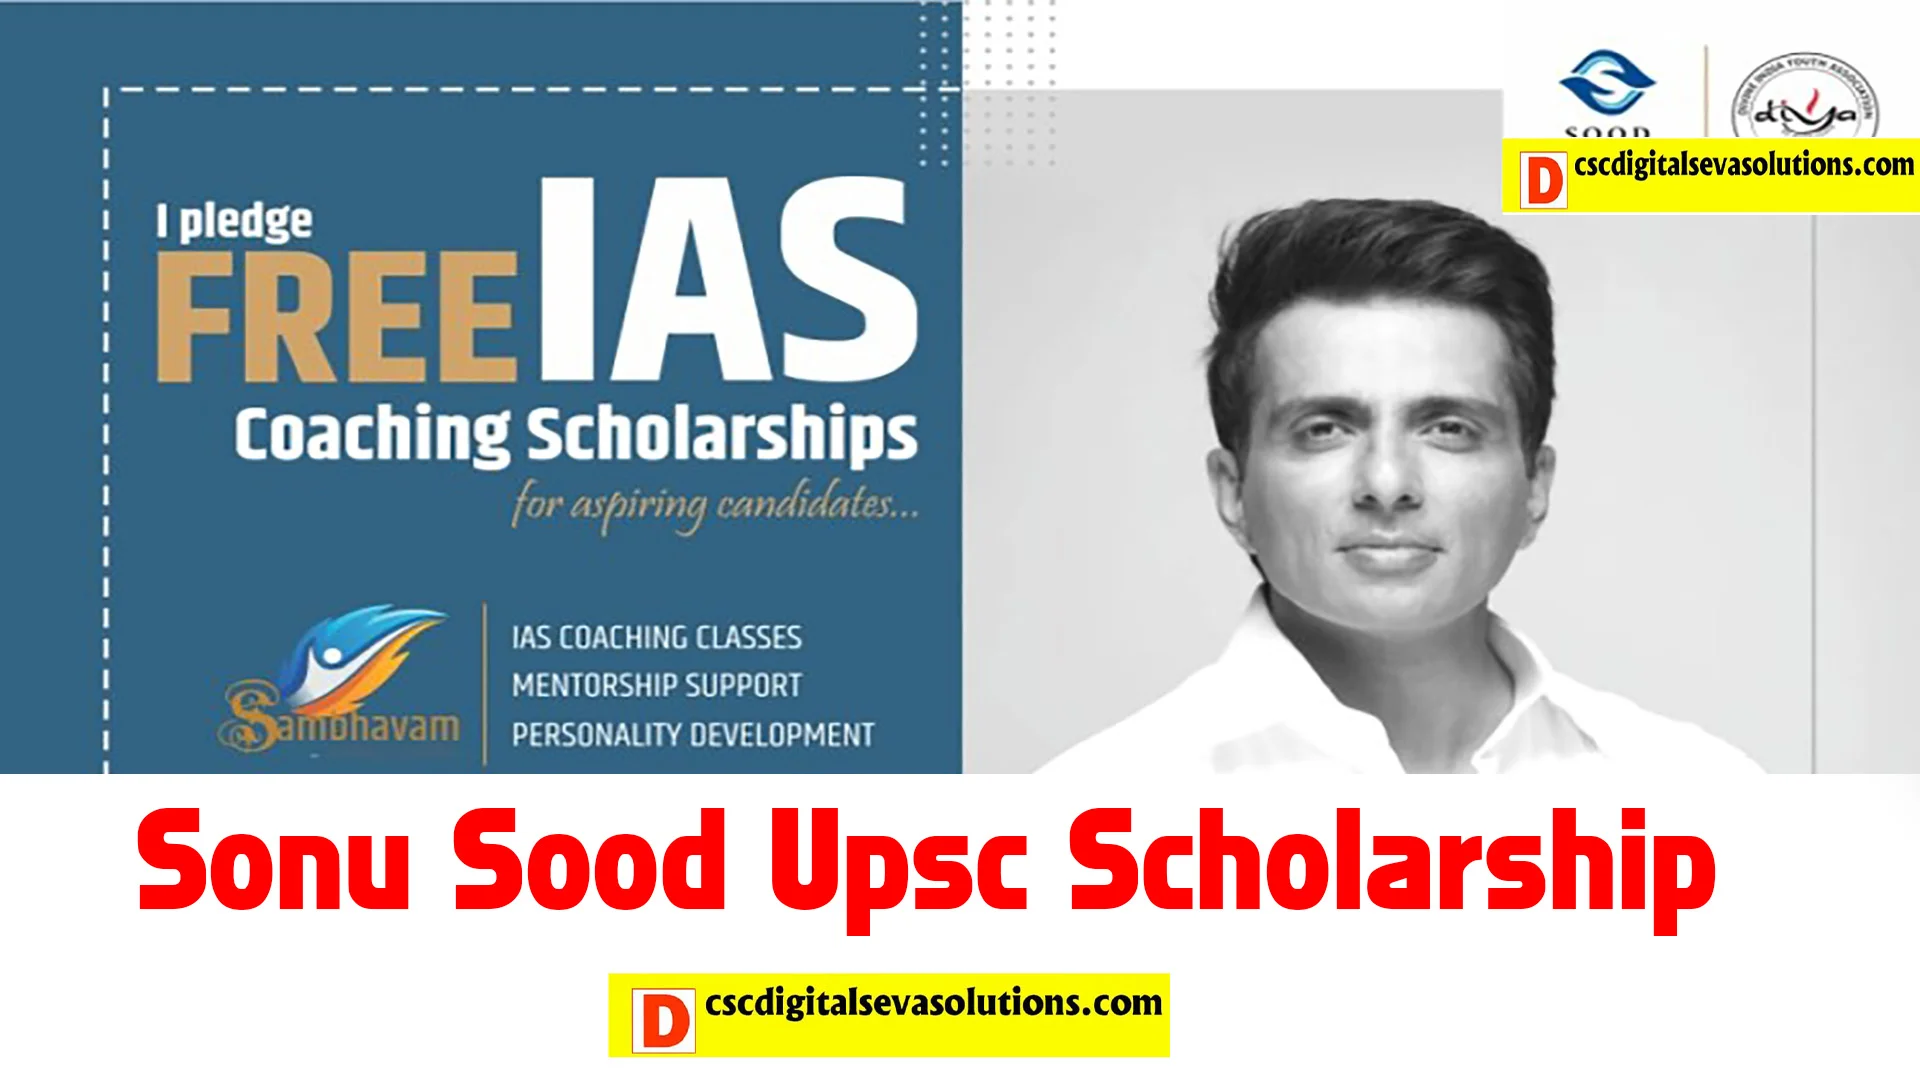 upsc scholarship